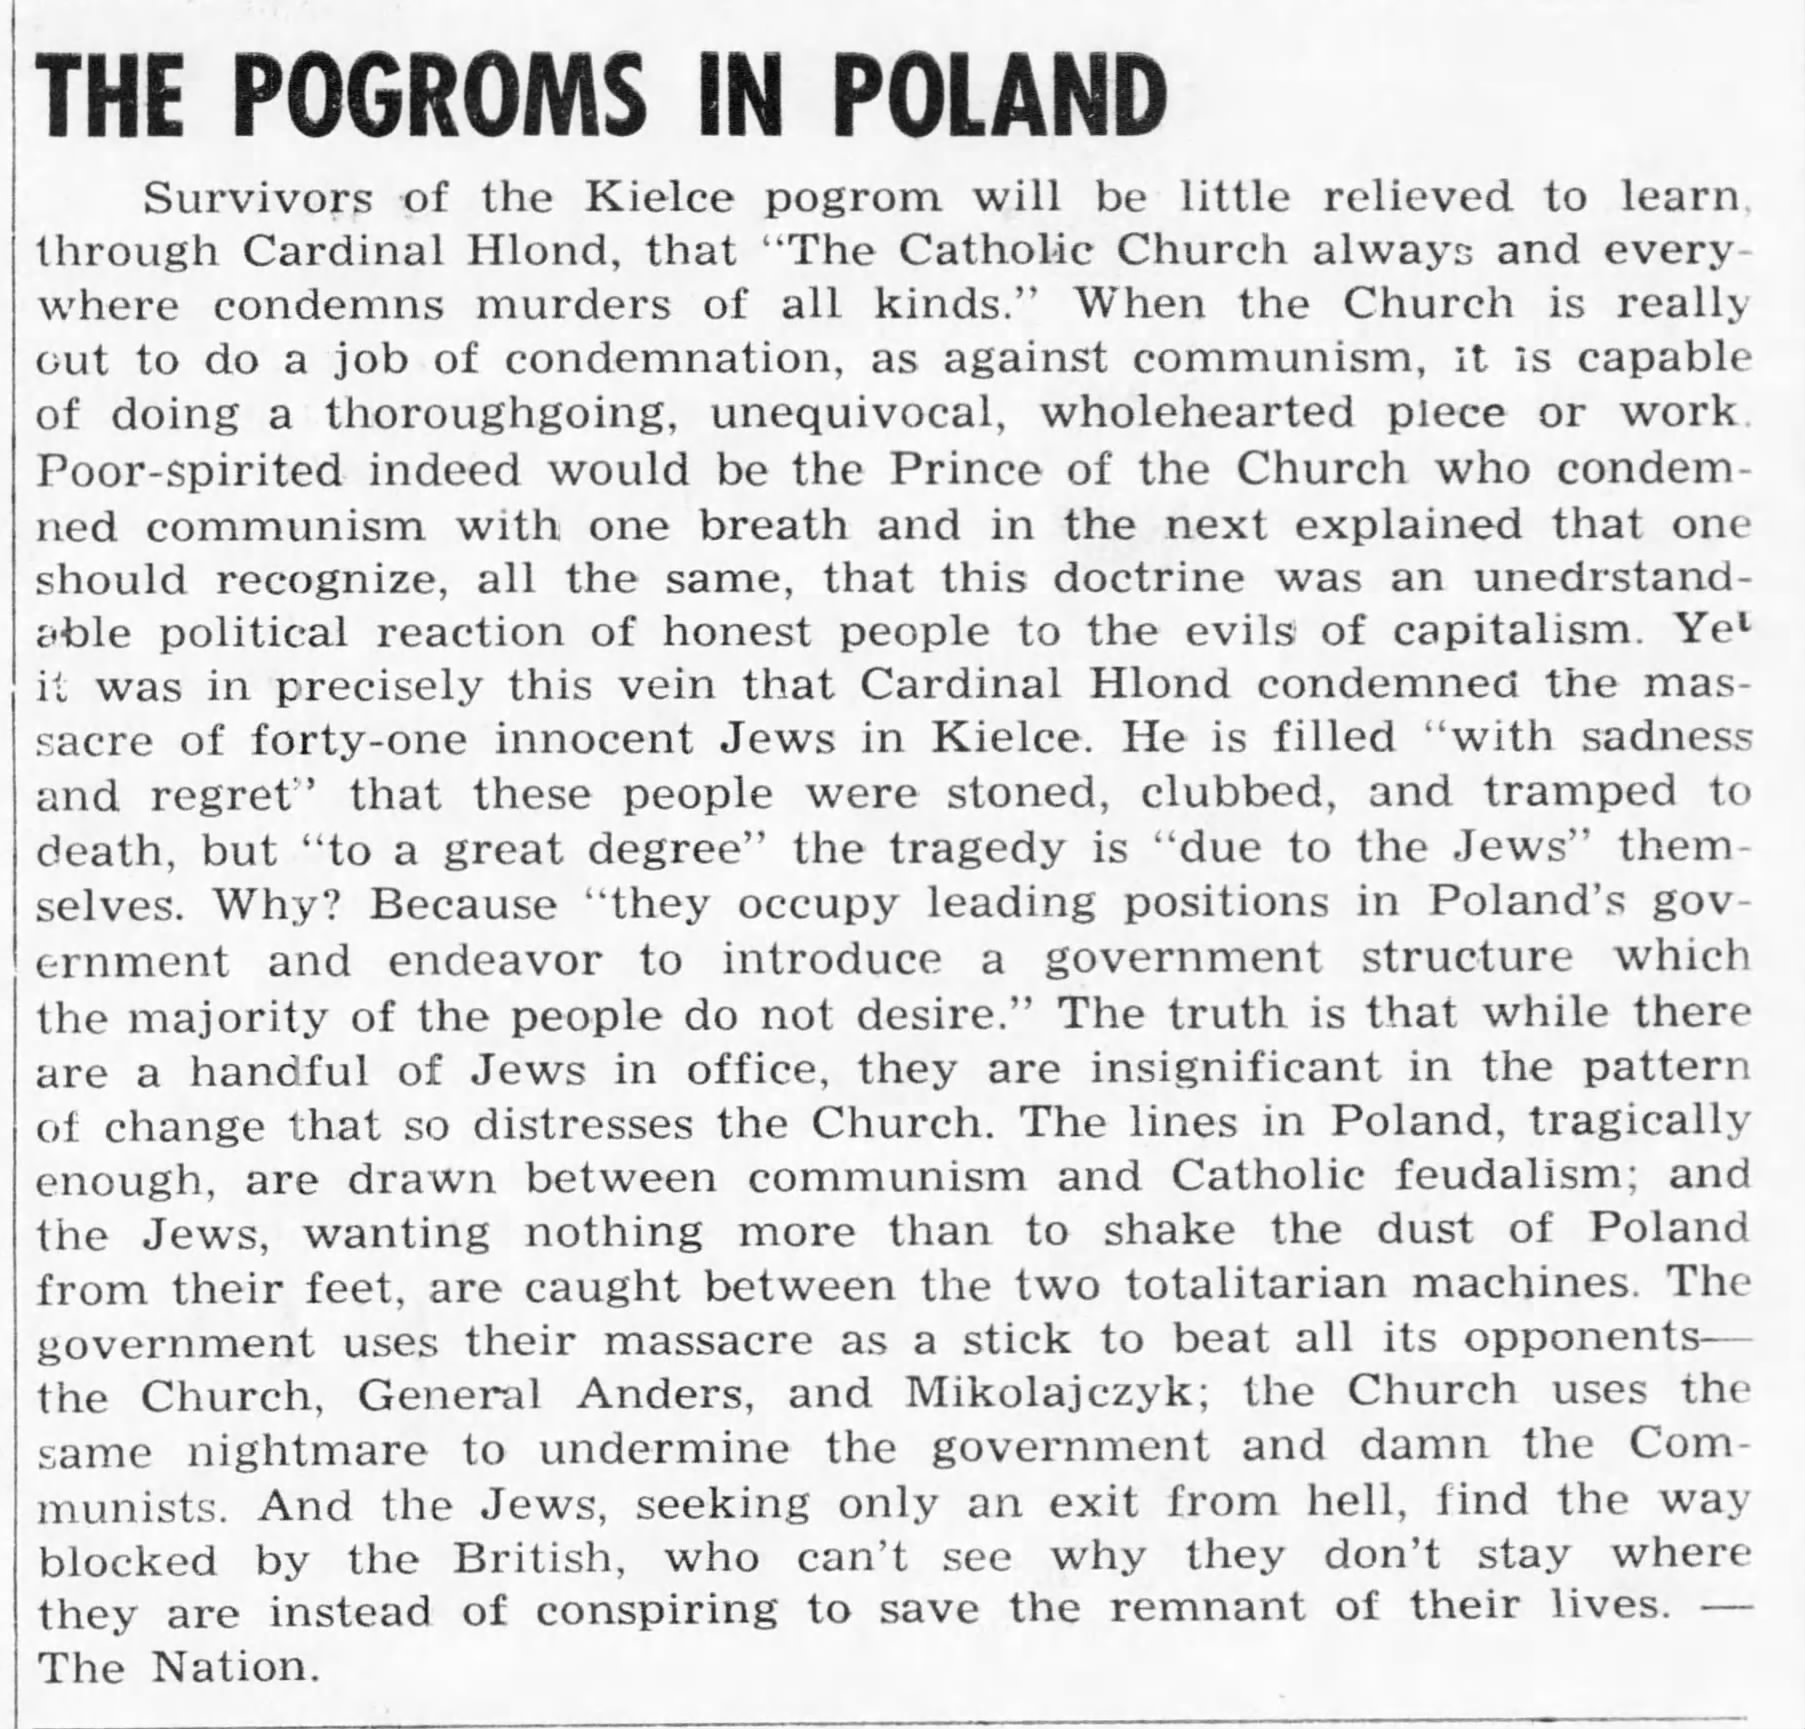 The Pogroms in Poland